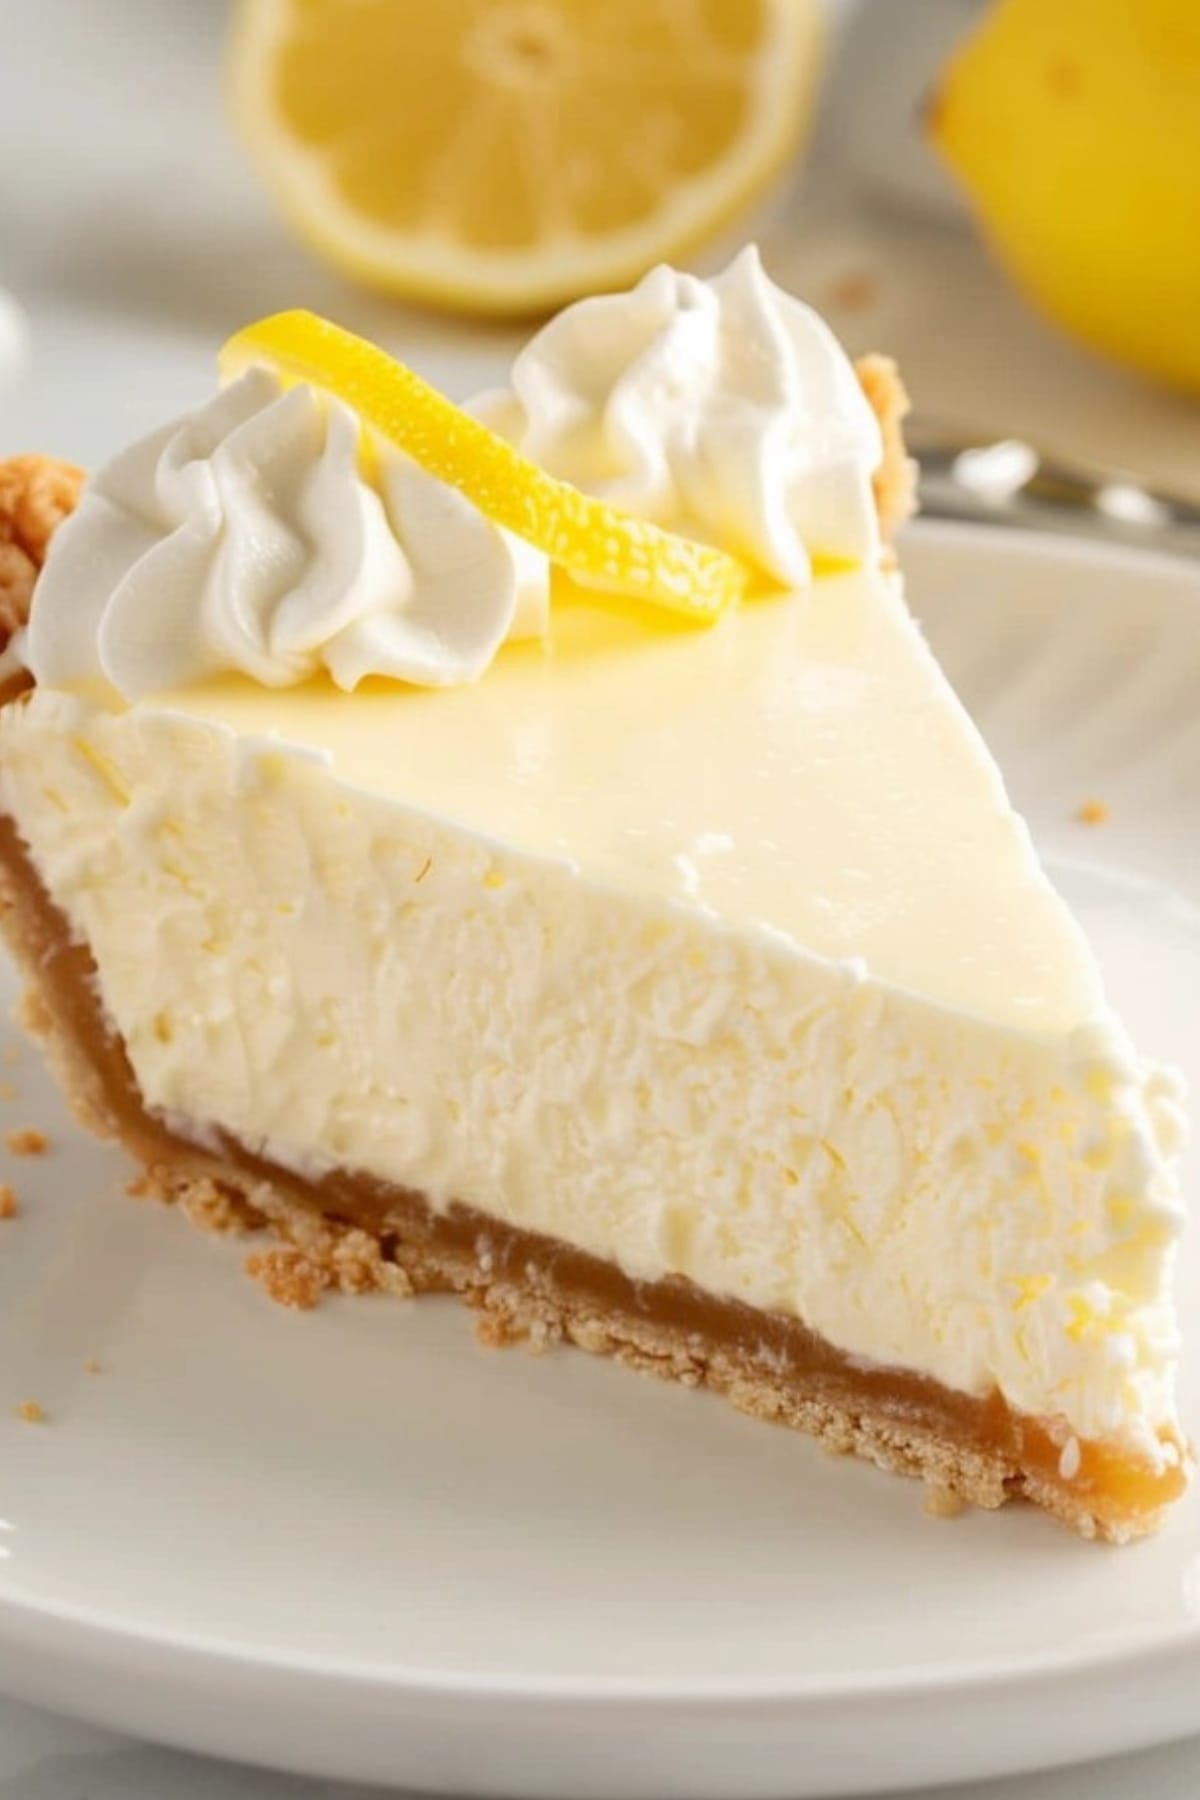 Cream Cheese Lemonade Pie slice in a white plate garnished